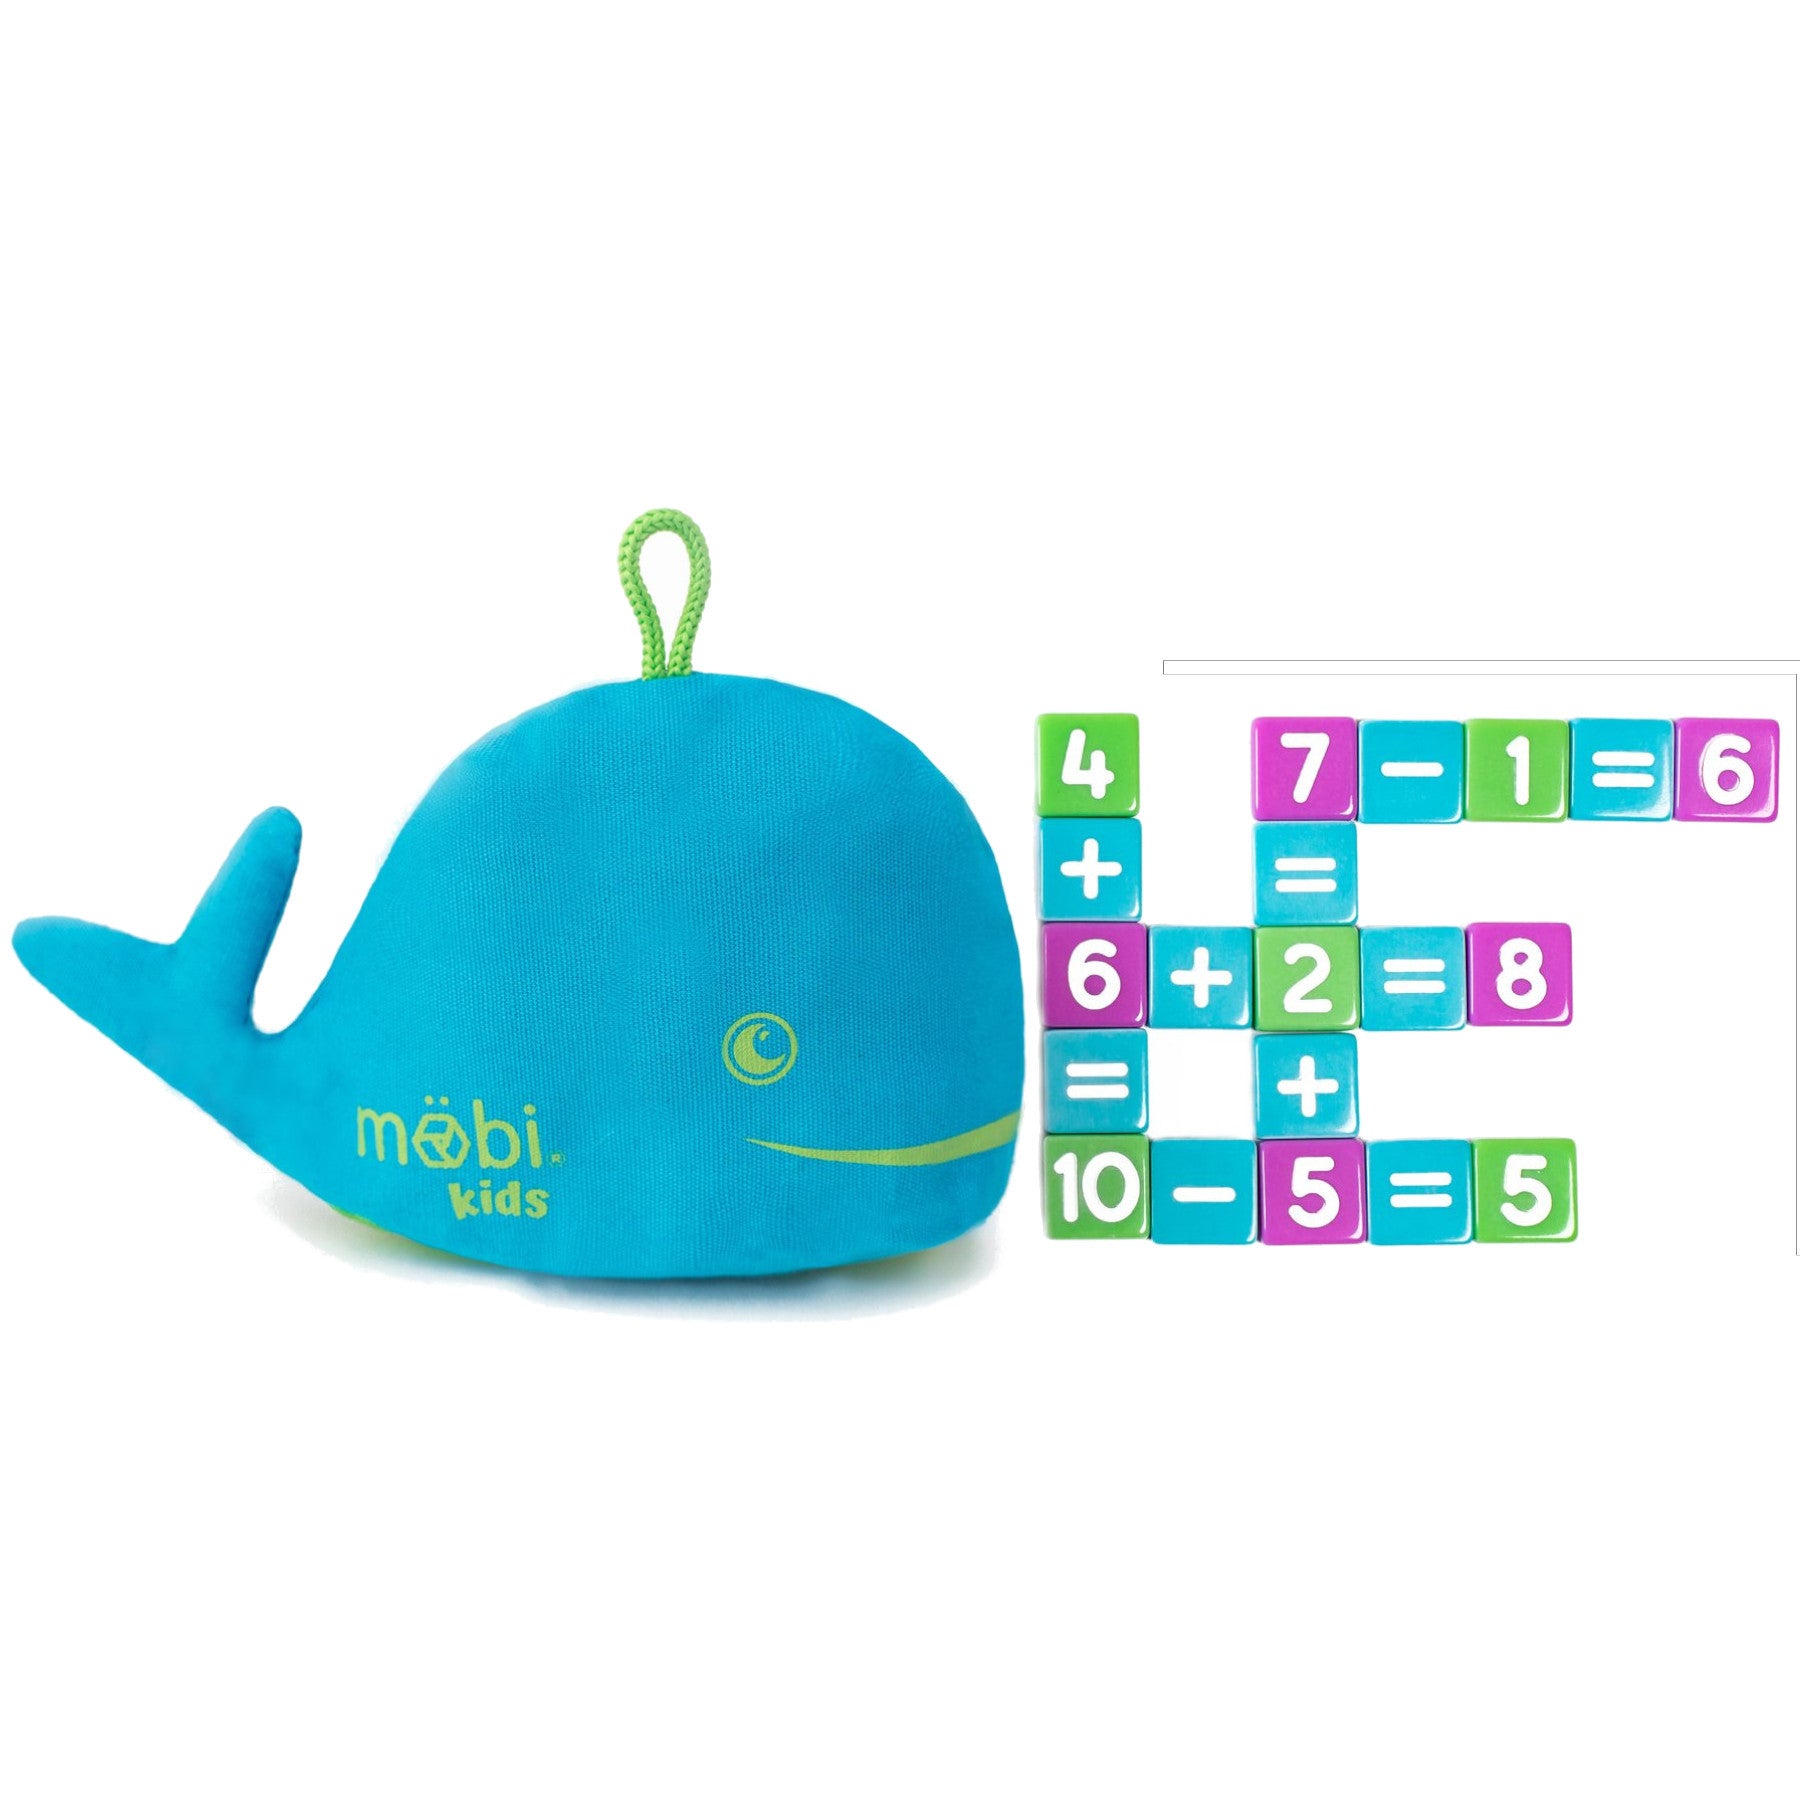 Mobi Kids Maths Game in Whale Bag